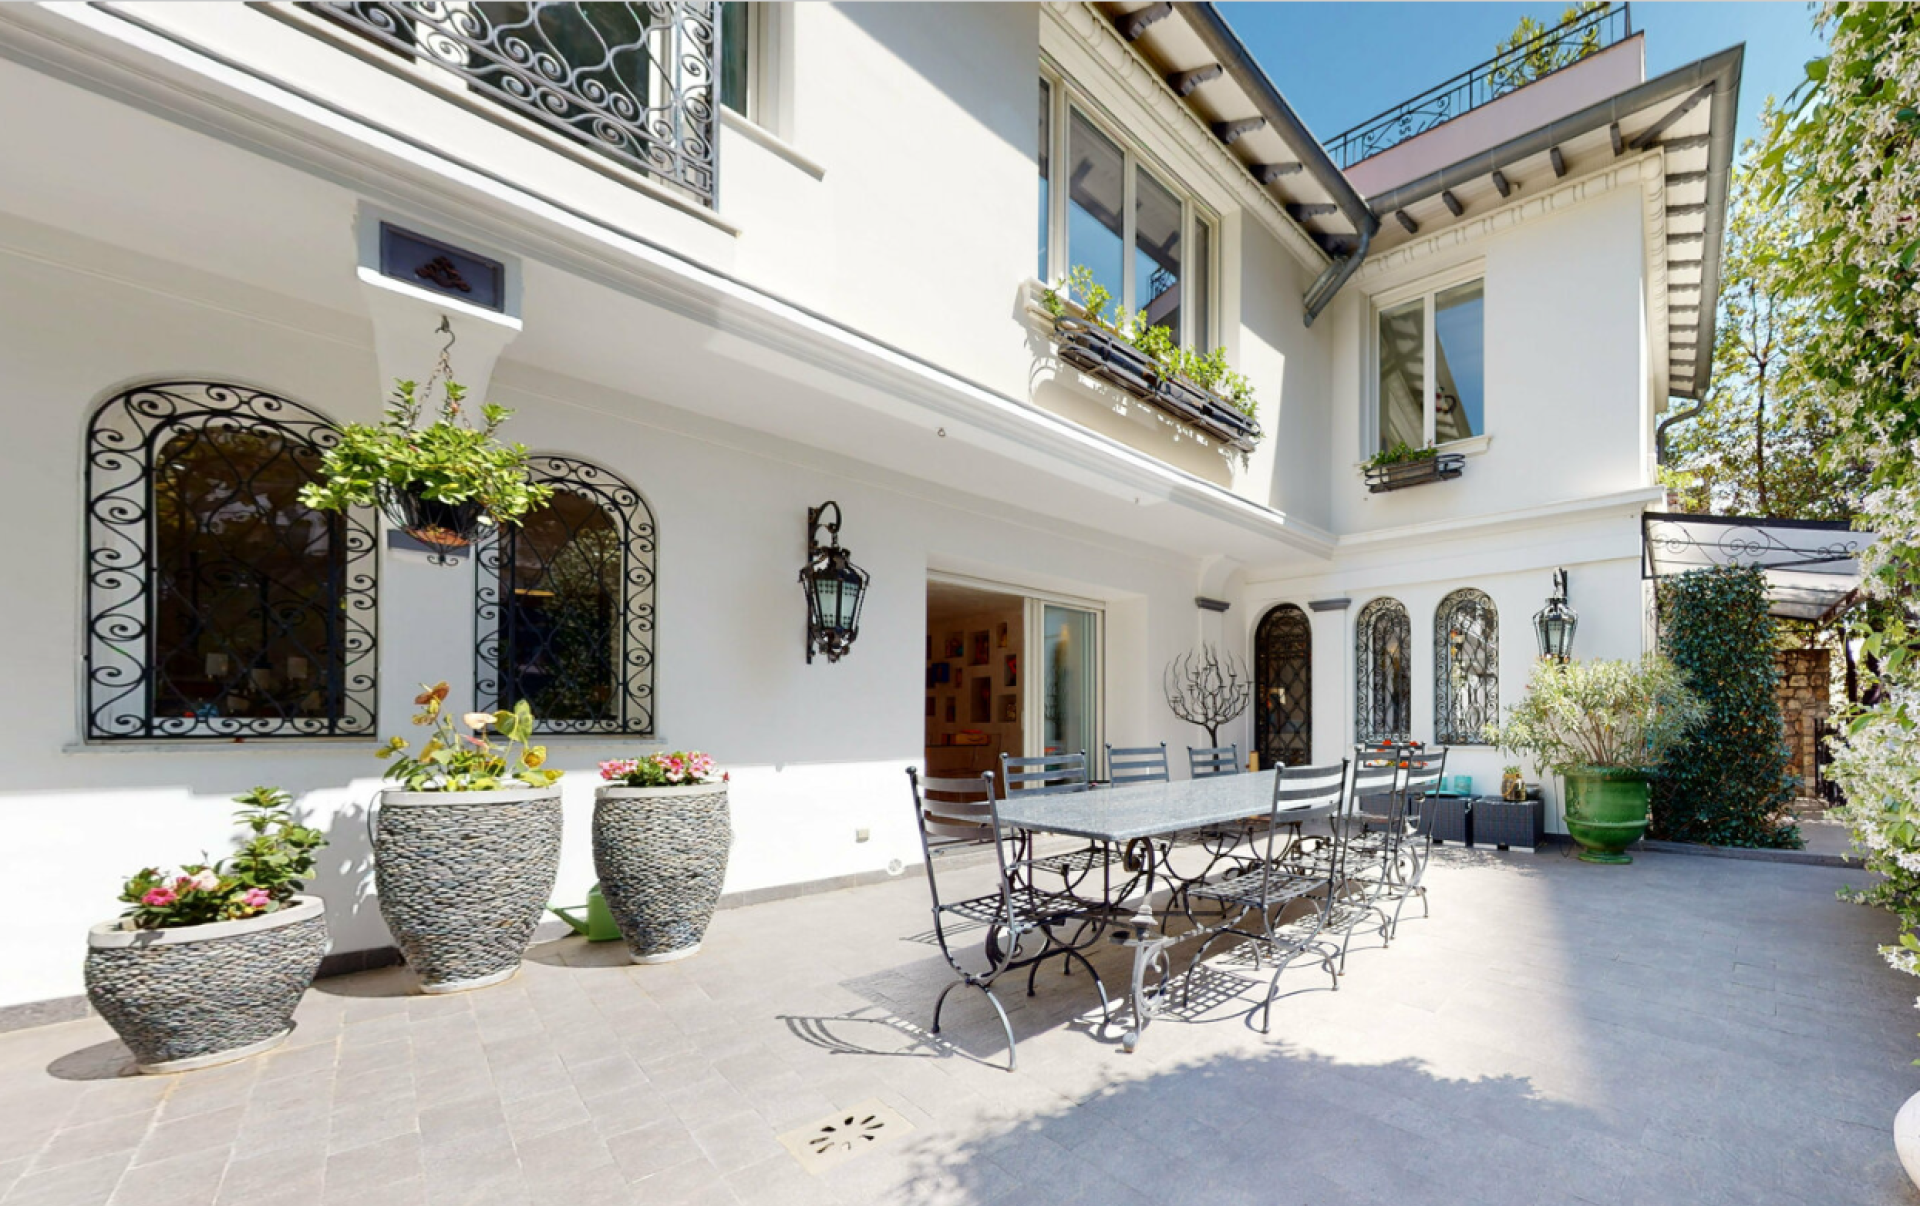 Dotta 6+ rooms apartment for sale - VILLA ALBAYA - Saint-Roman - Monaco - imgfe